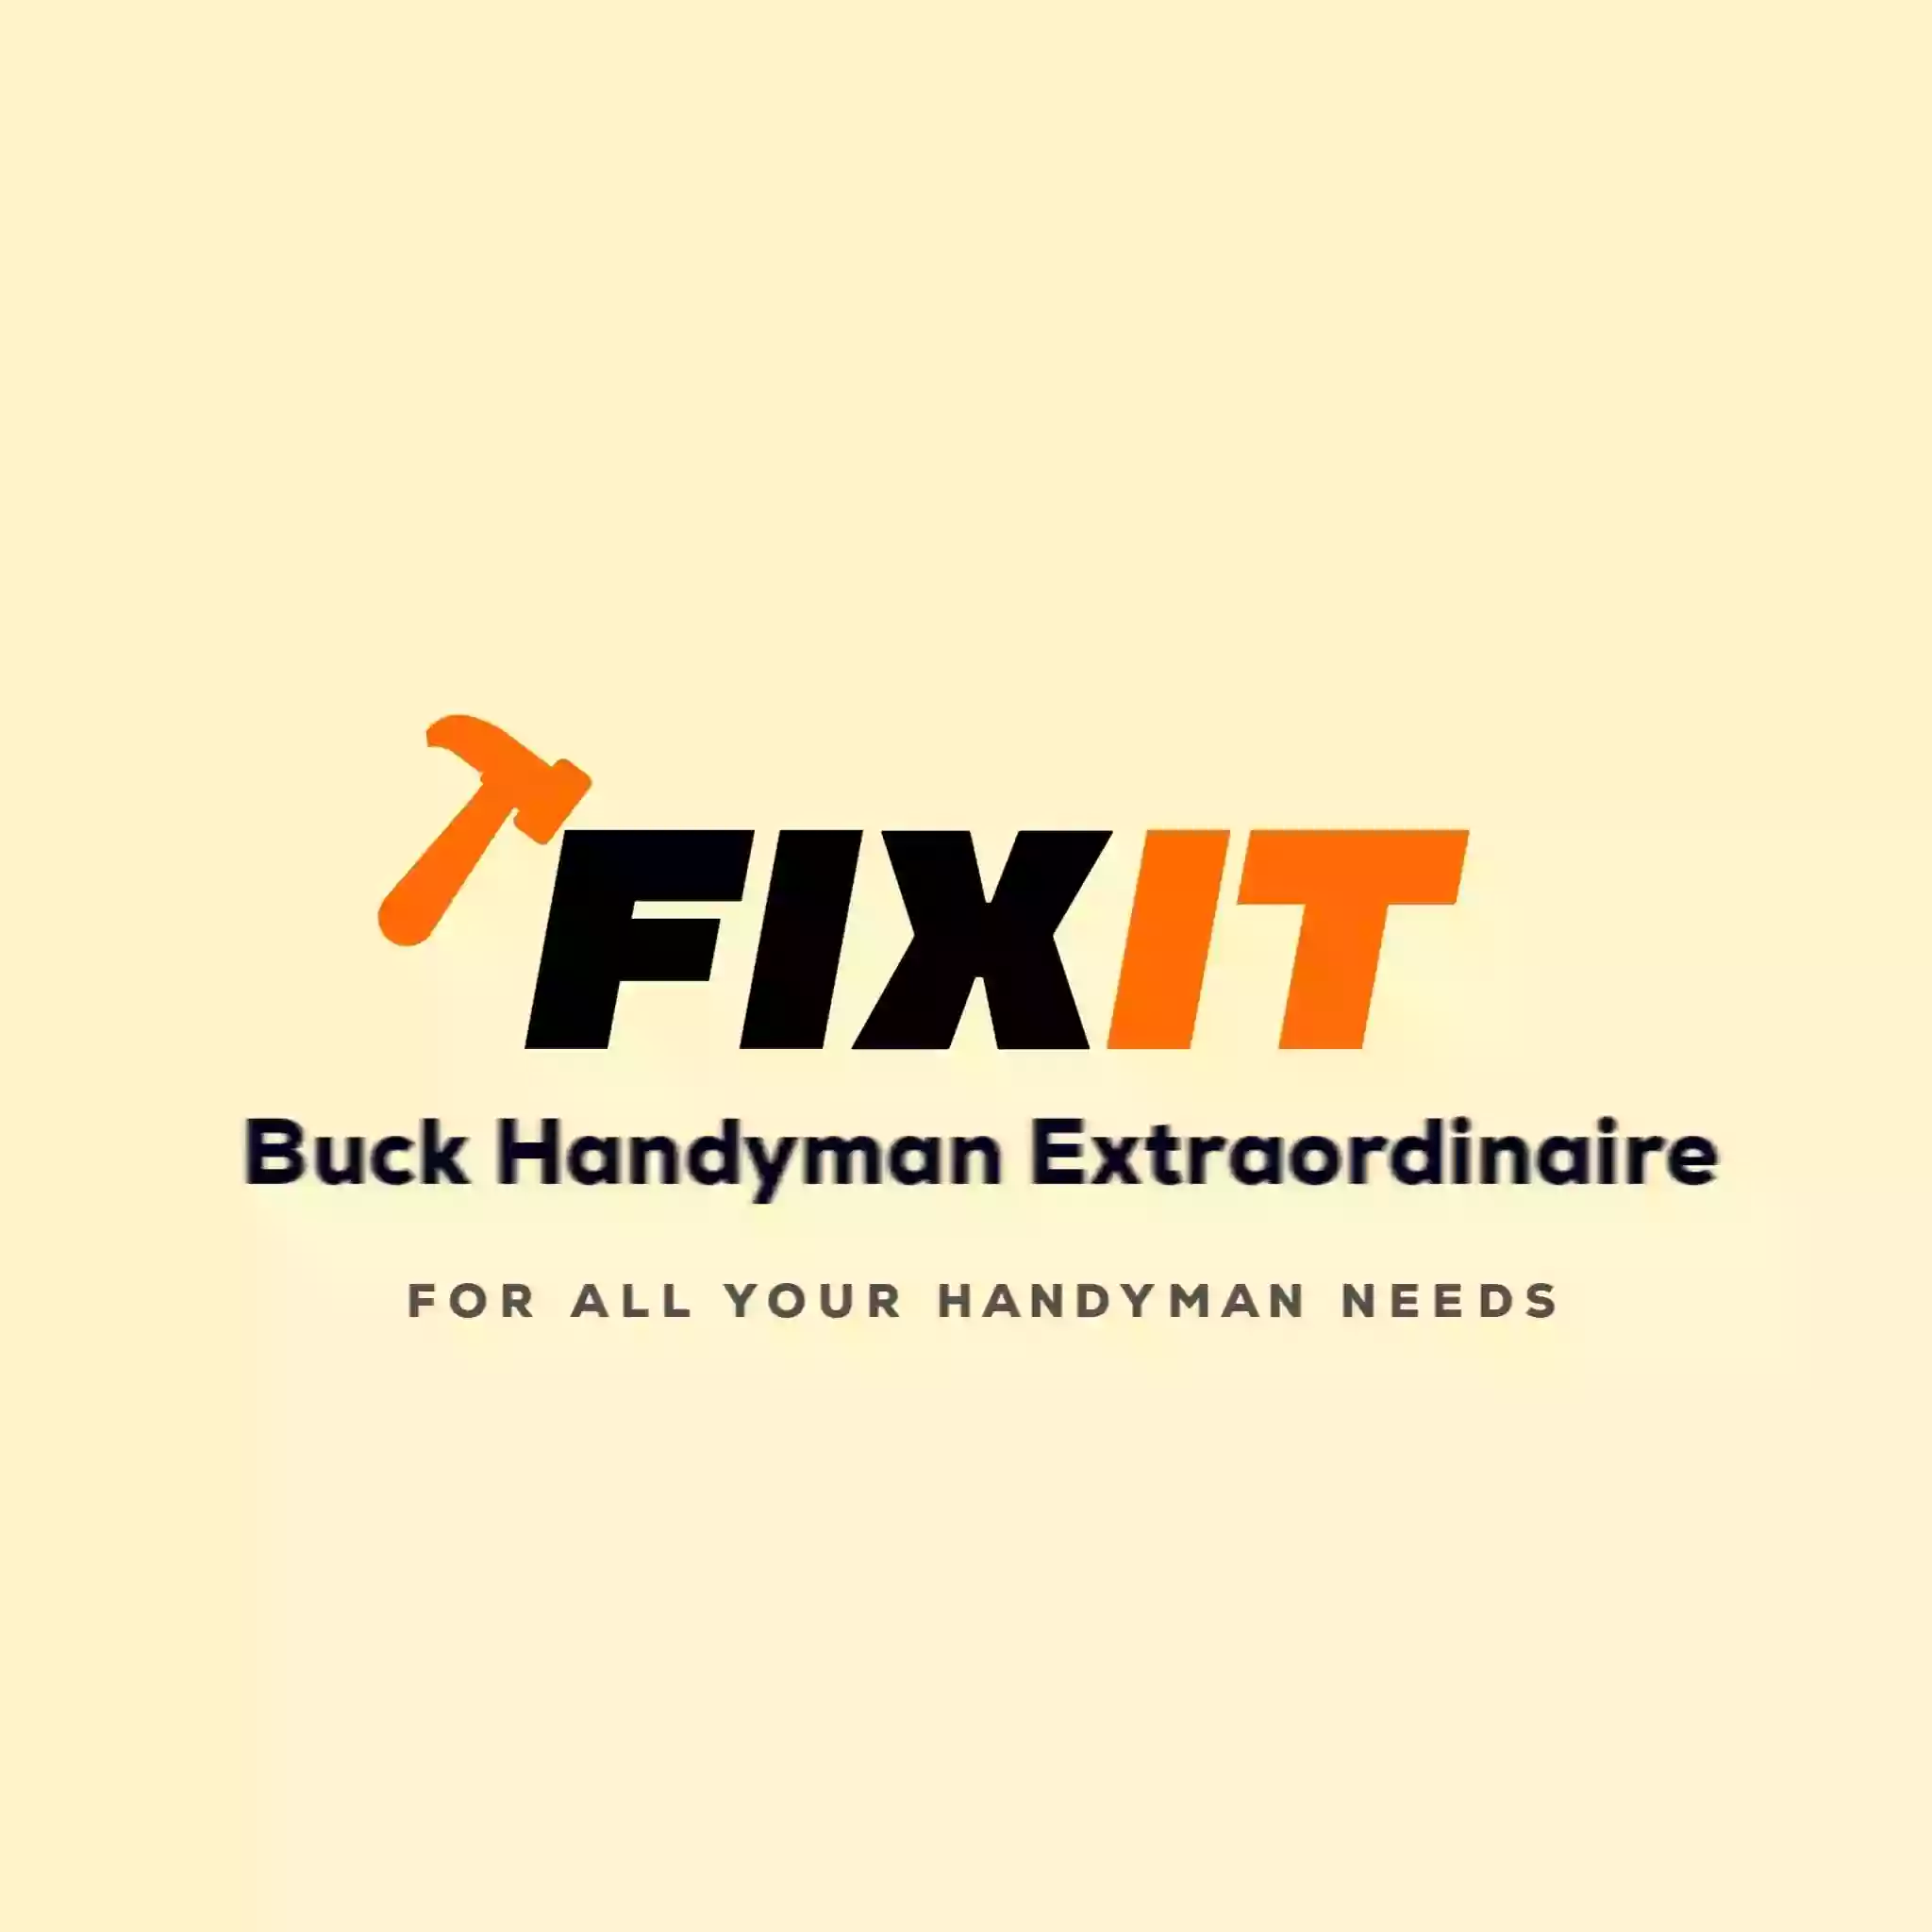 Buck Handyman Extraordinaire